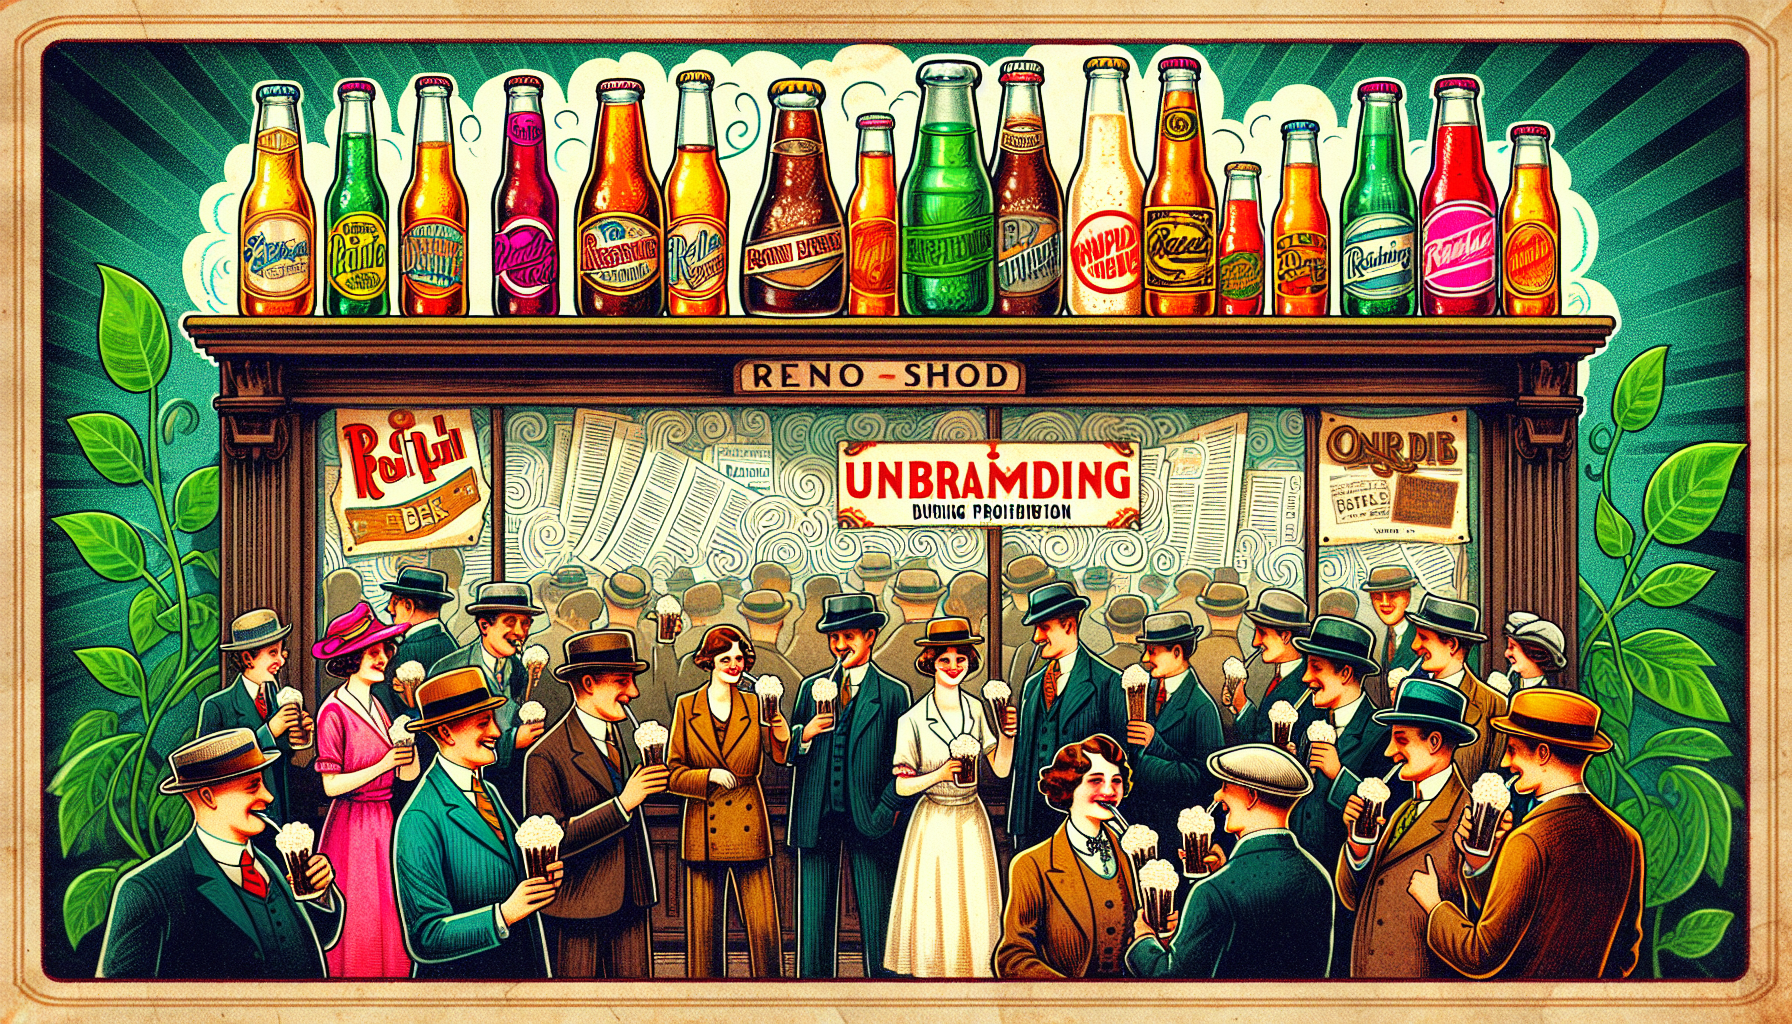 Modern root beer brands emerging post-Prohibition